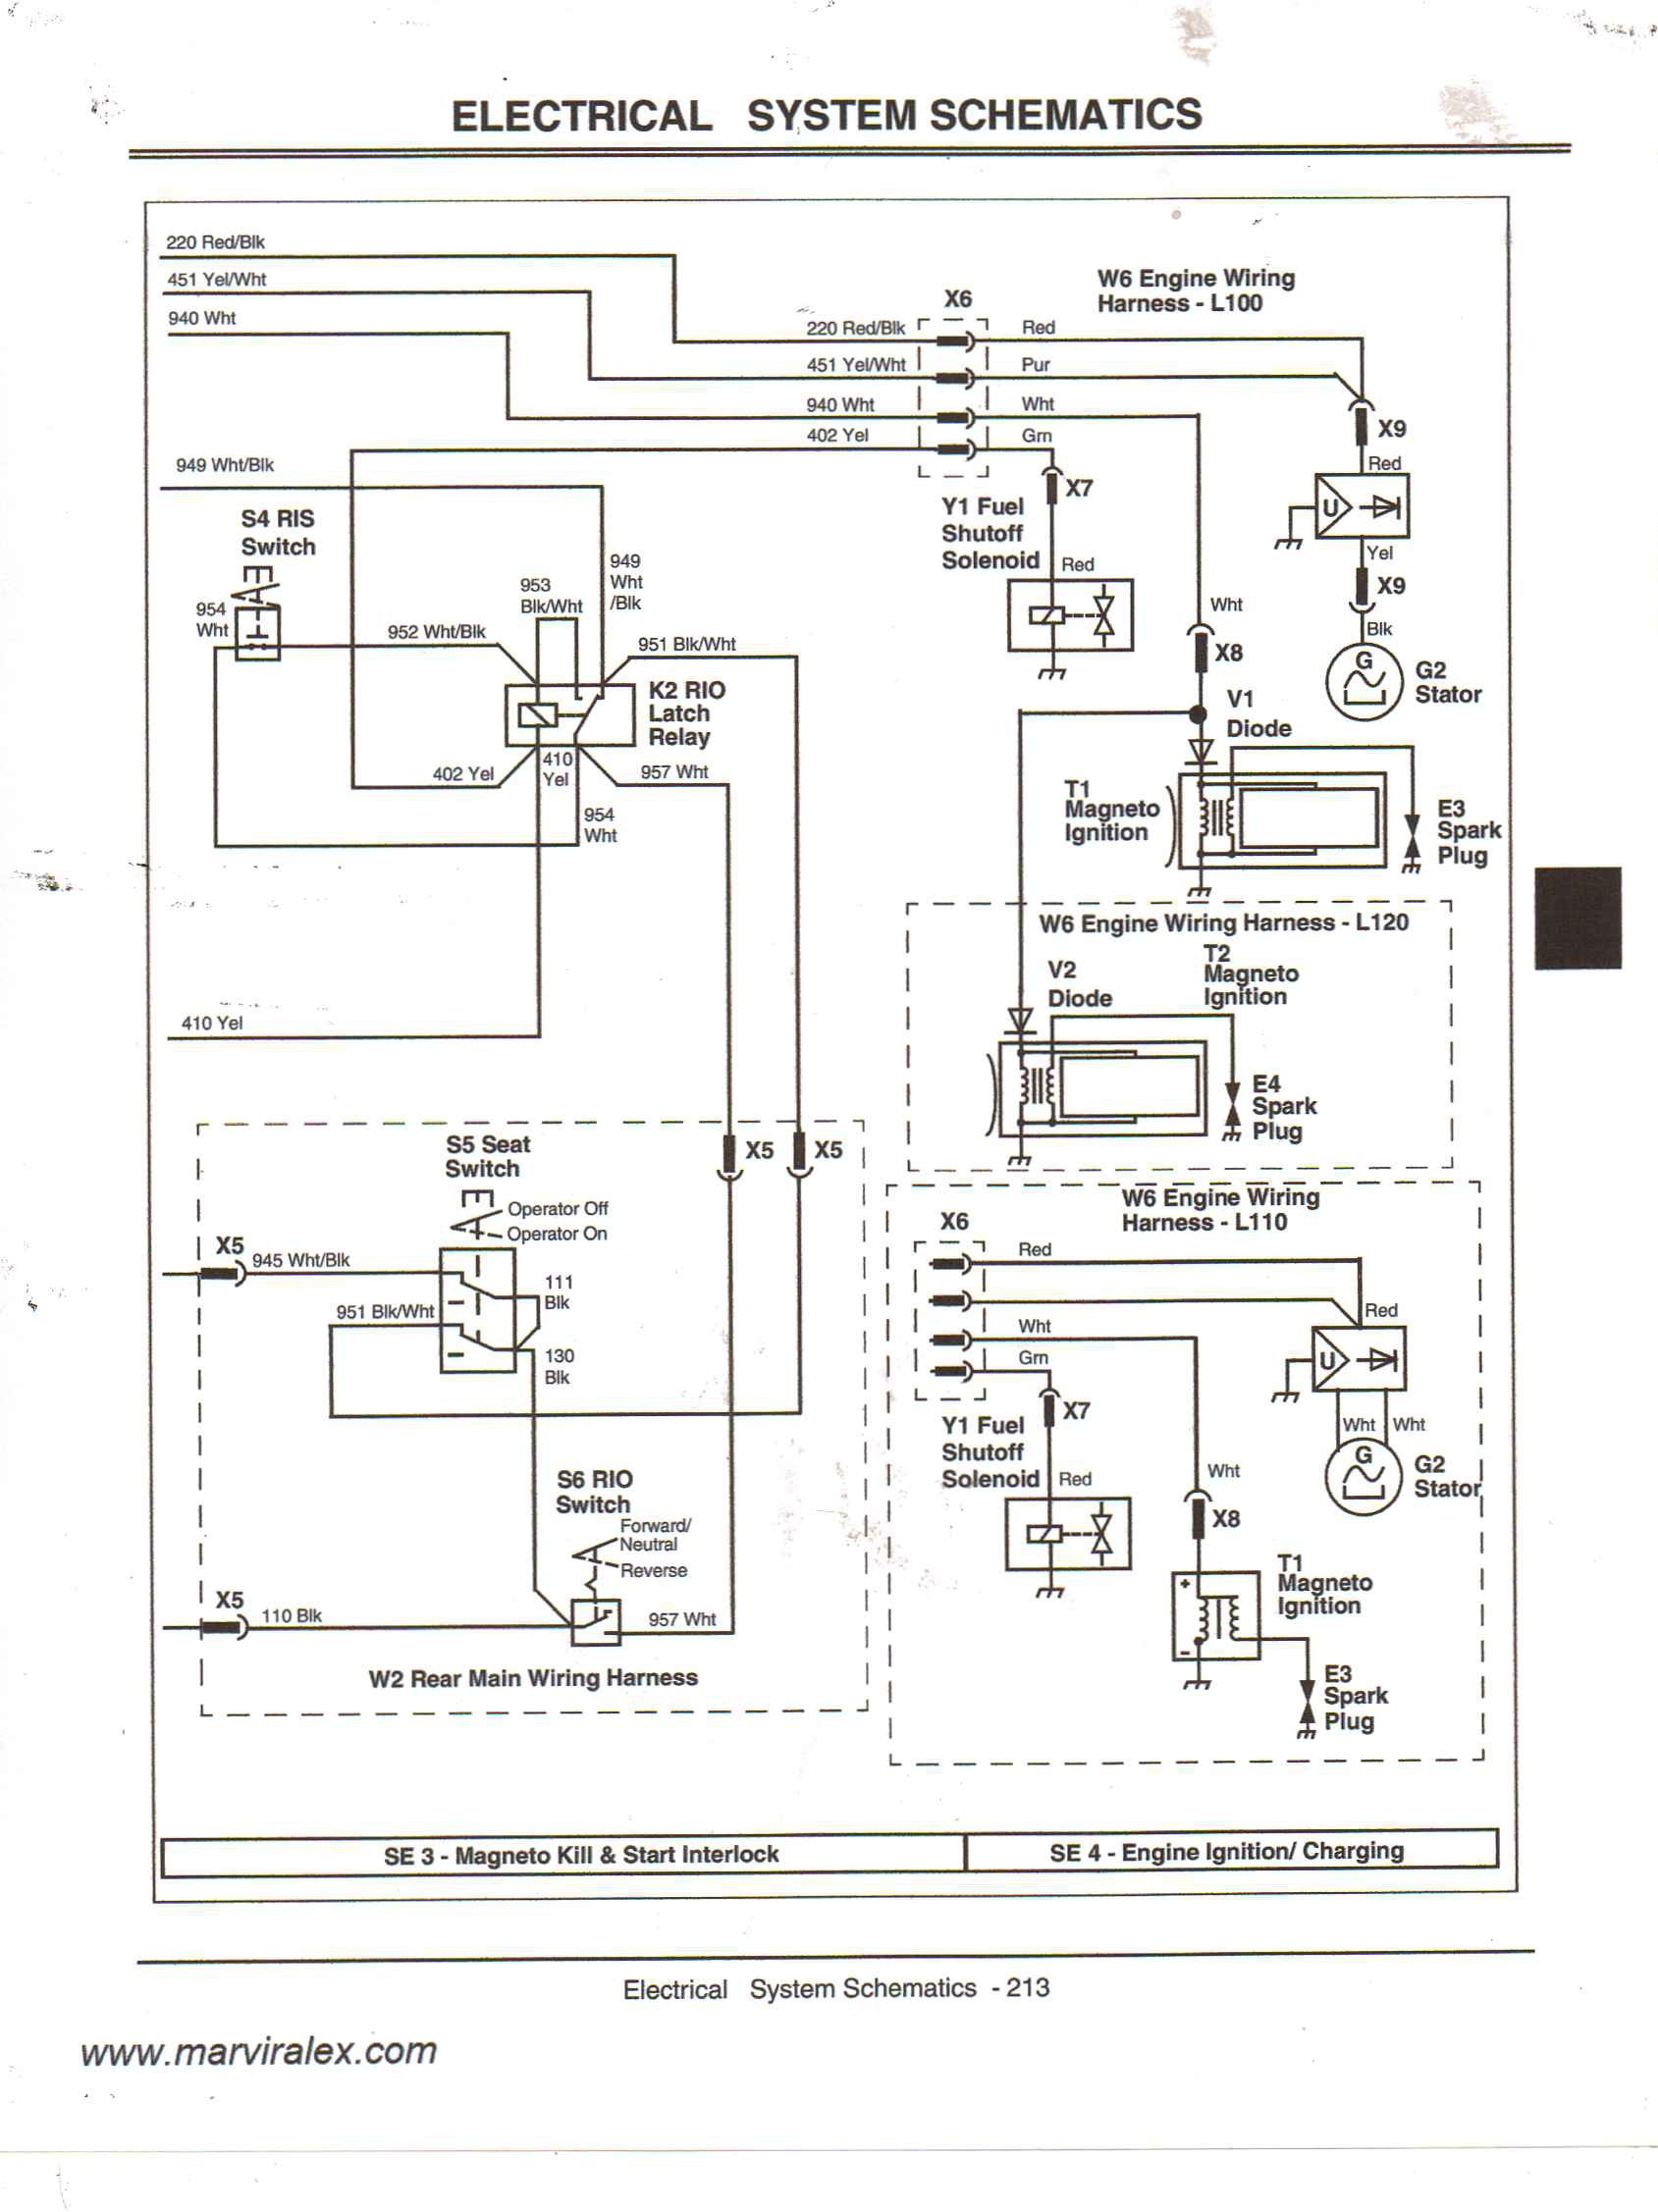 Rv Electrical Wiring Diagram New Great John Deere Z225 Wiring Diagram Inspiration